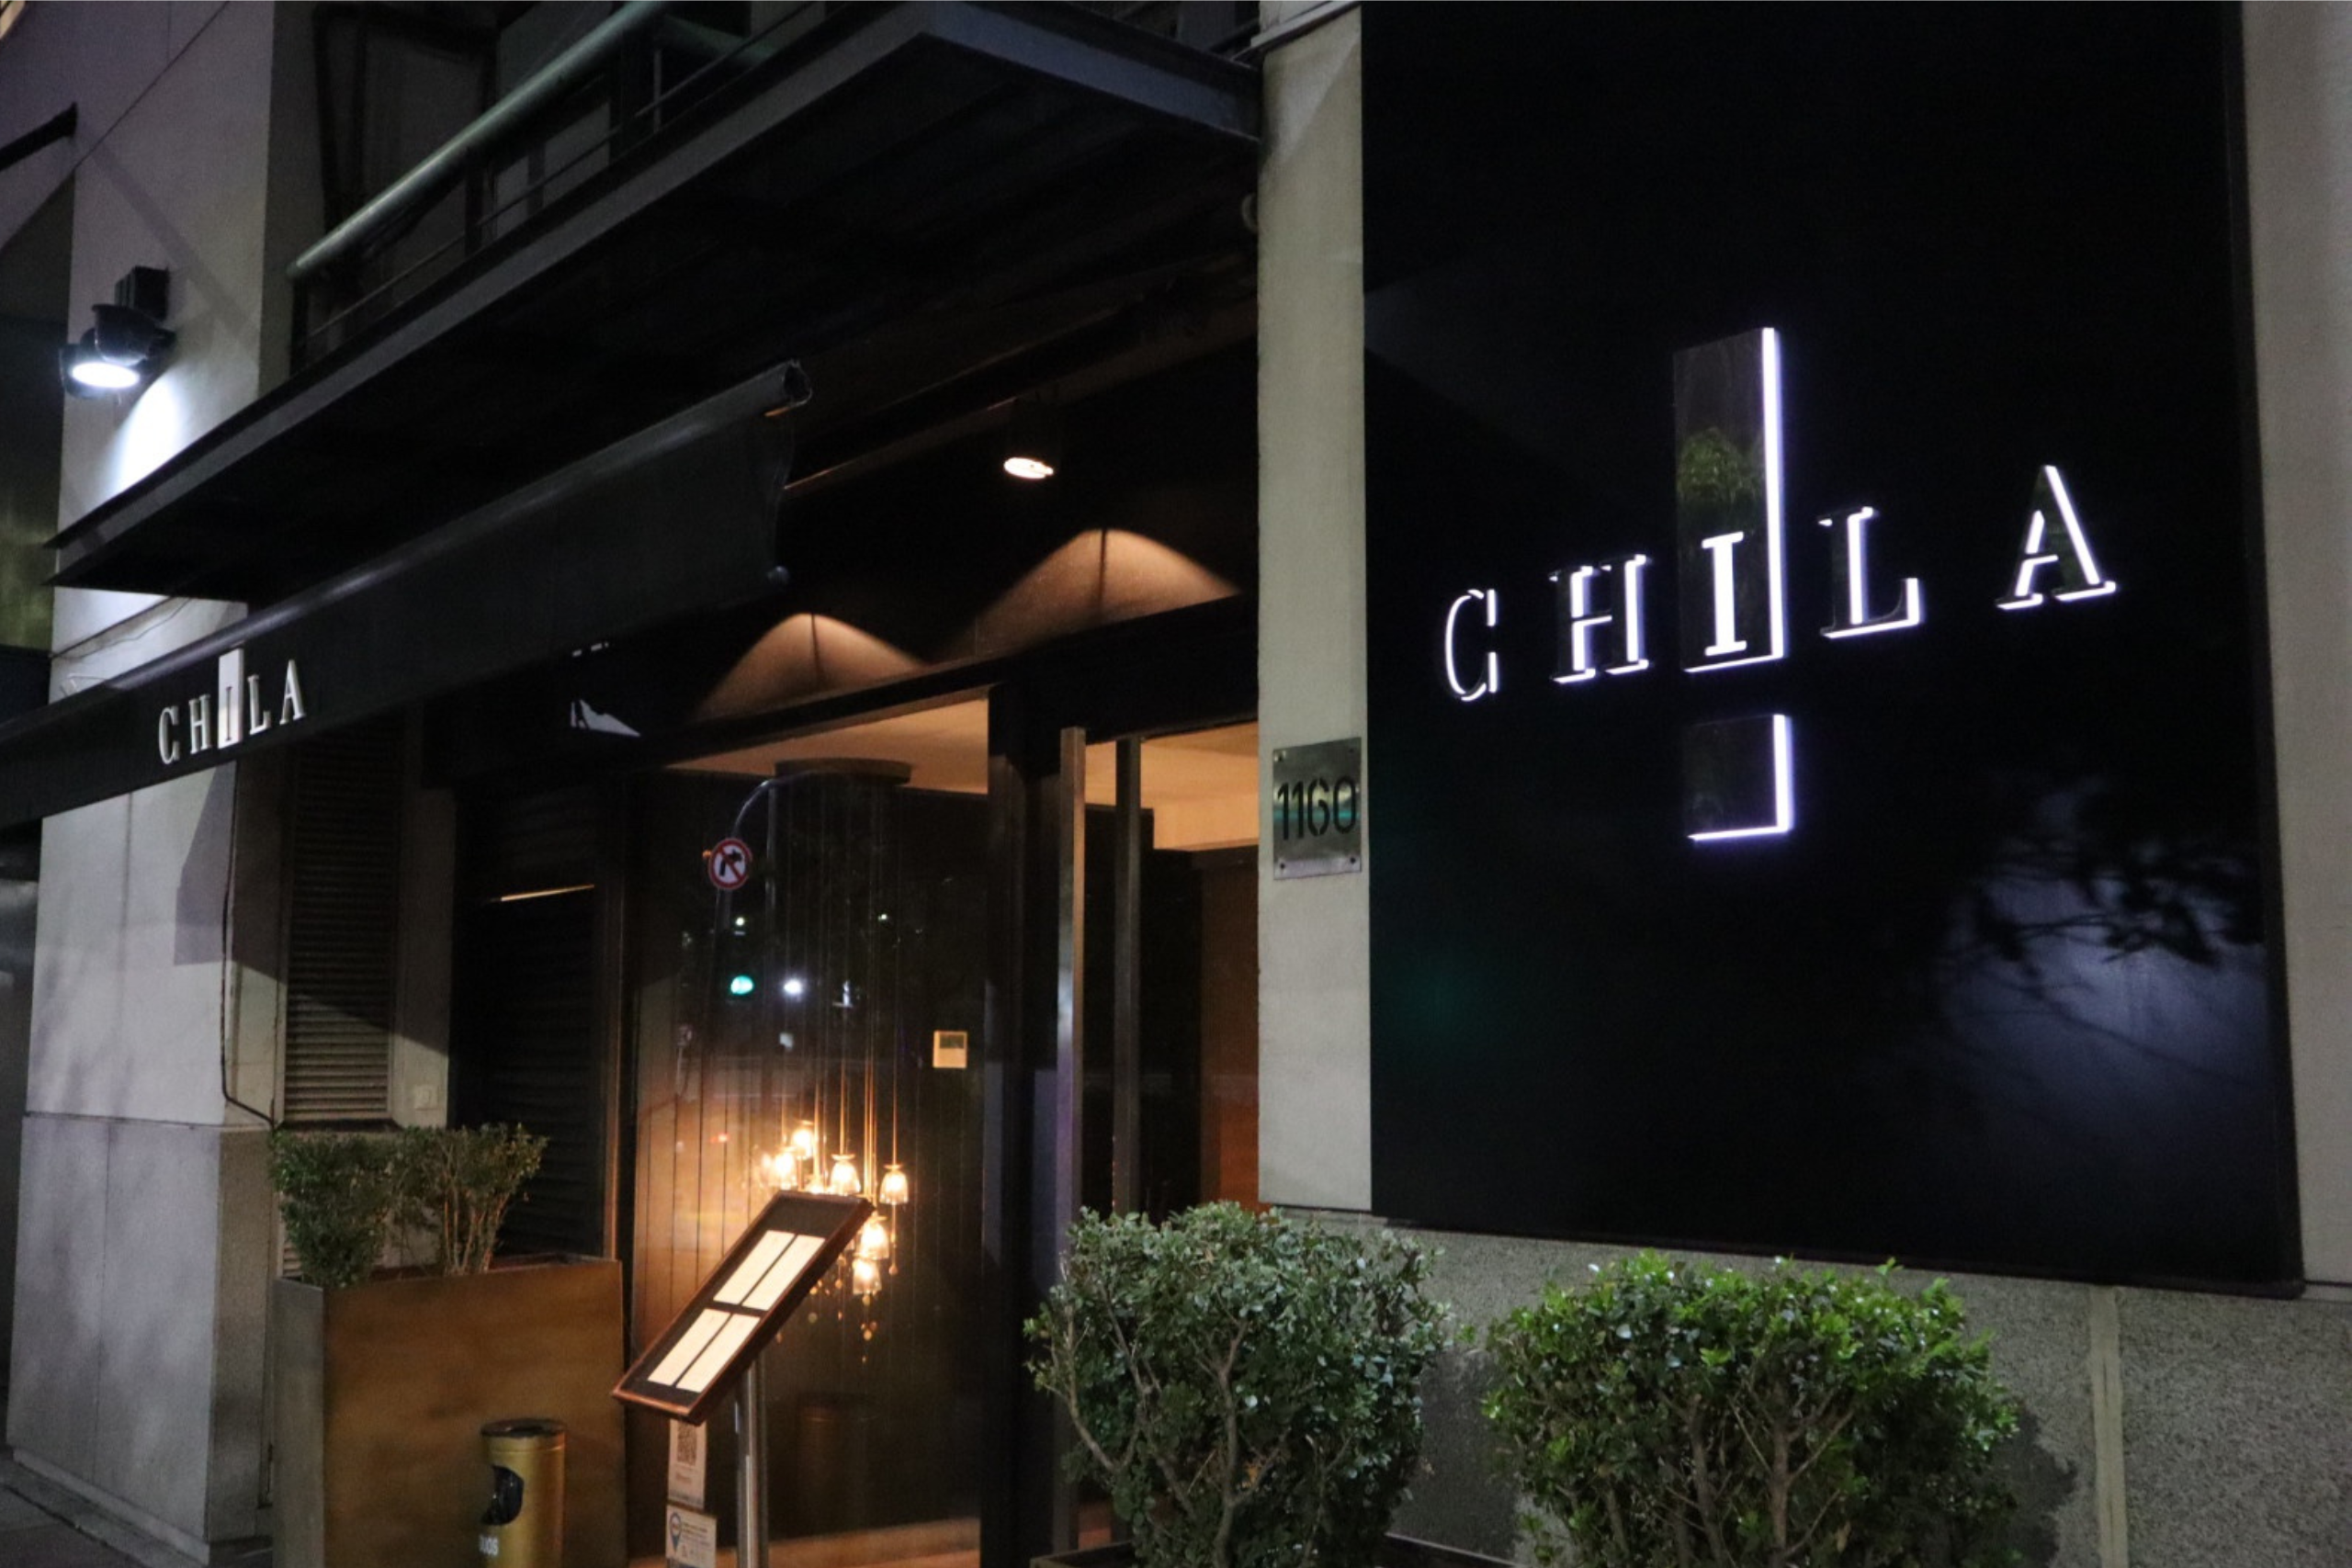 Chila - restaurants buenos aires